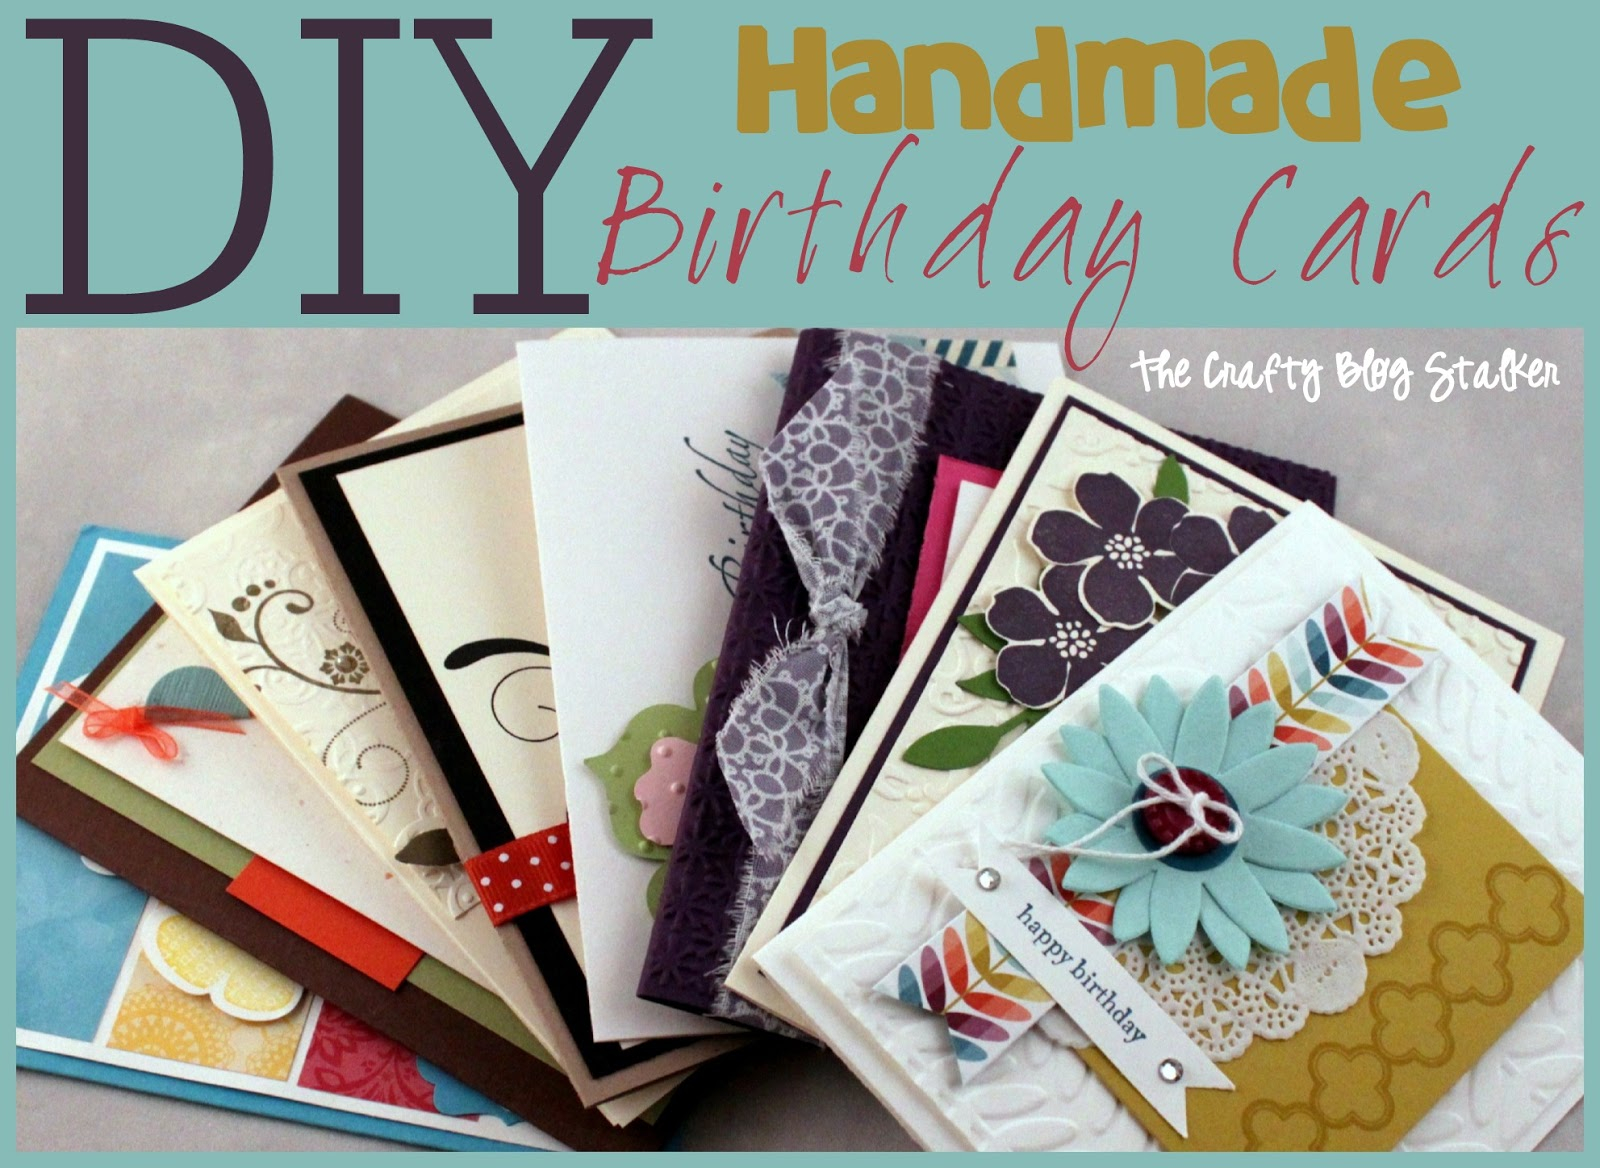 Creative Handmade Birthday Card Ideas Handmade Birthday Card Ideas The Crafty Blog Stalker